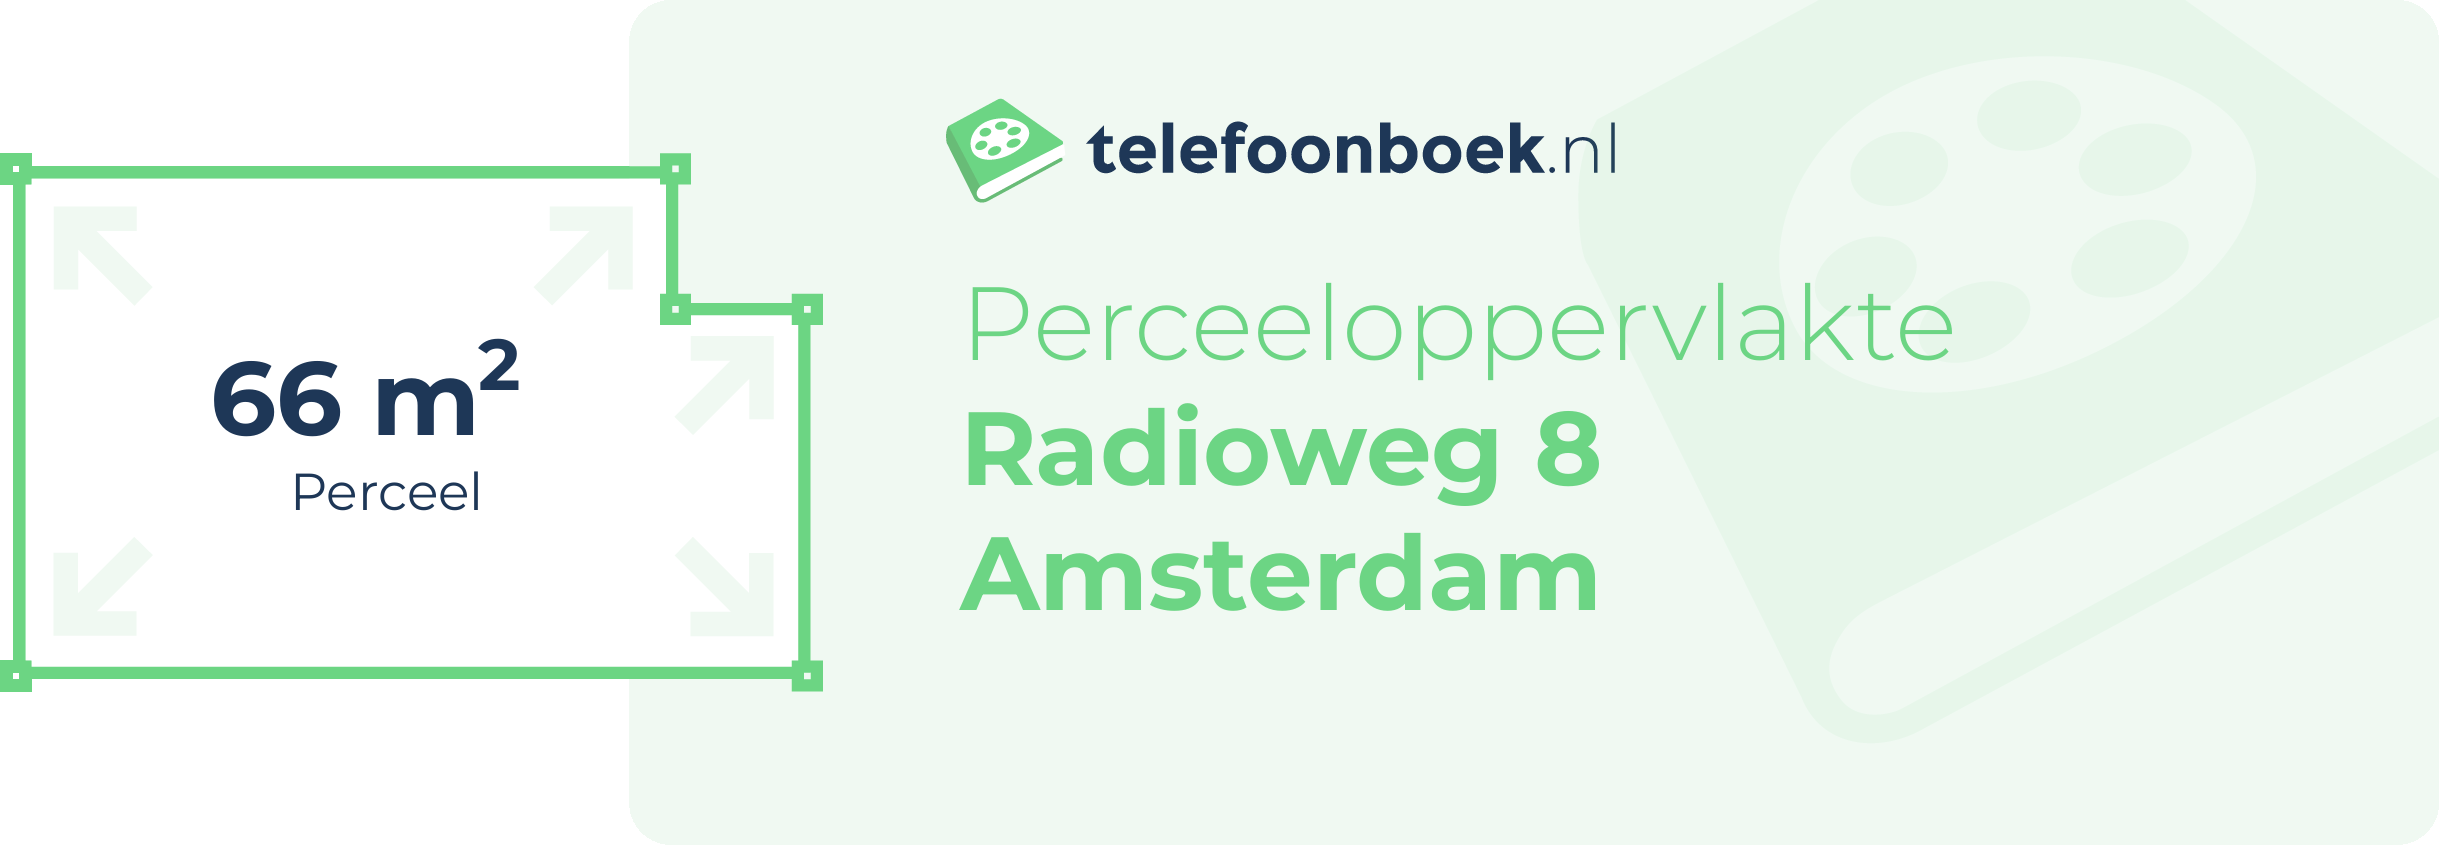 Perceeloppervlakte Radioweg 8 Amsterdam